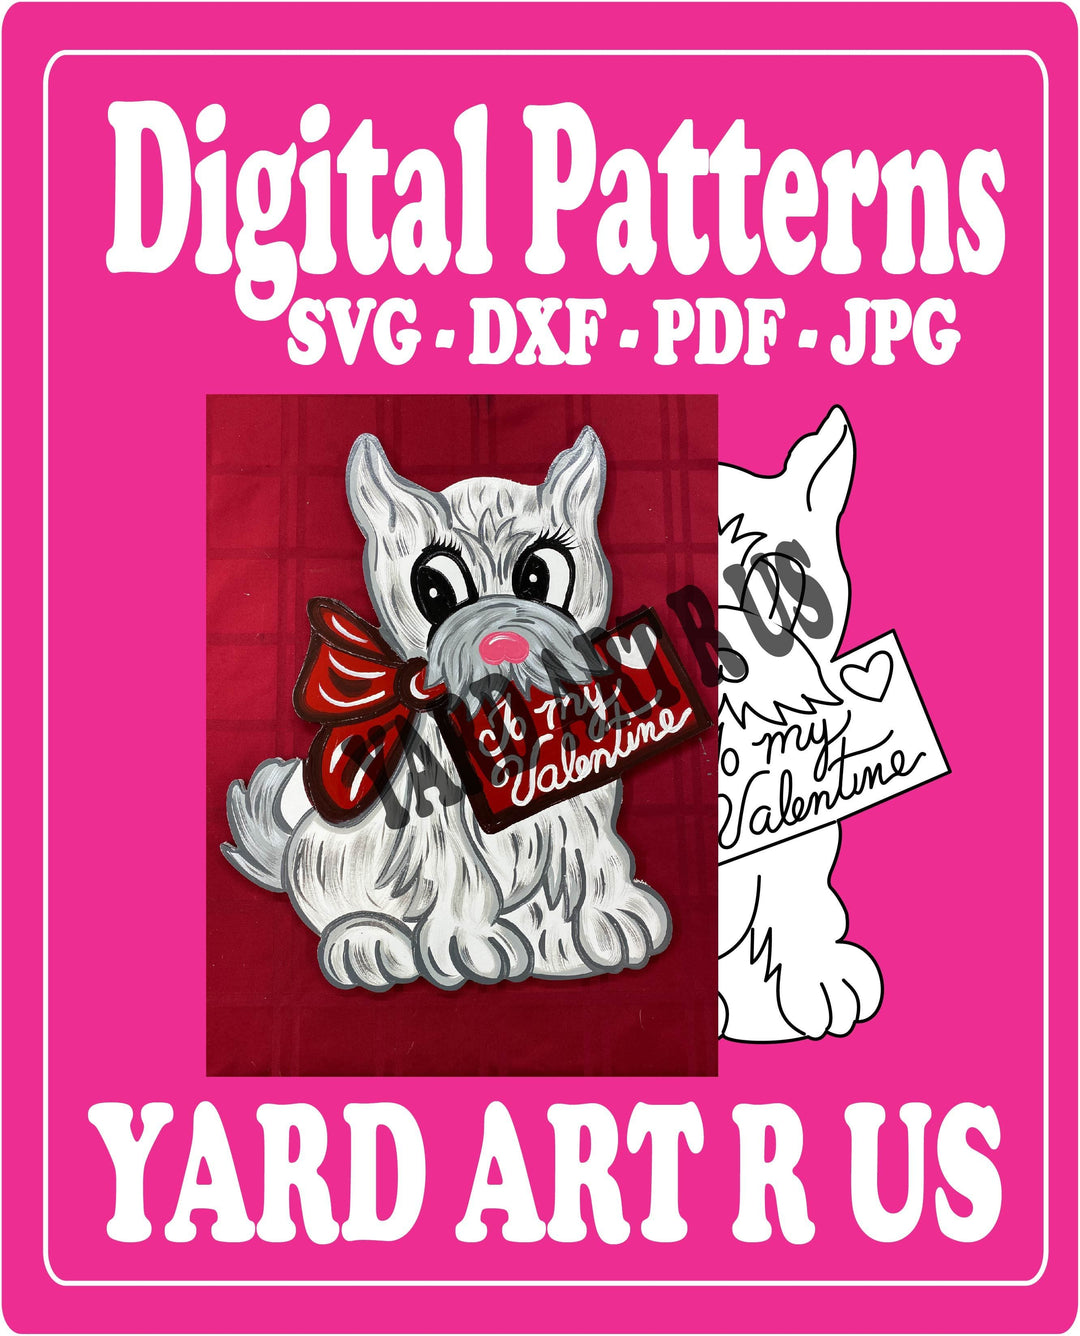 Dog Valentine digital pattern; SVG, DXF, PDF, and JPG file options